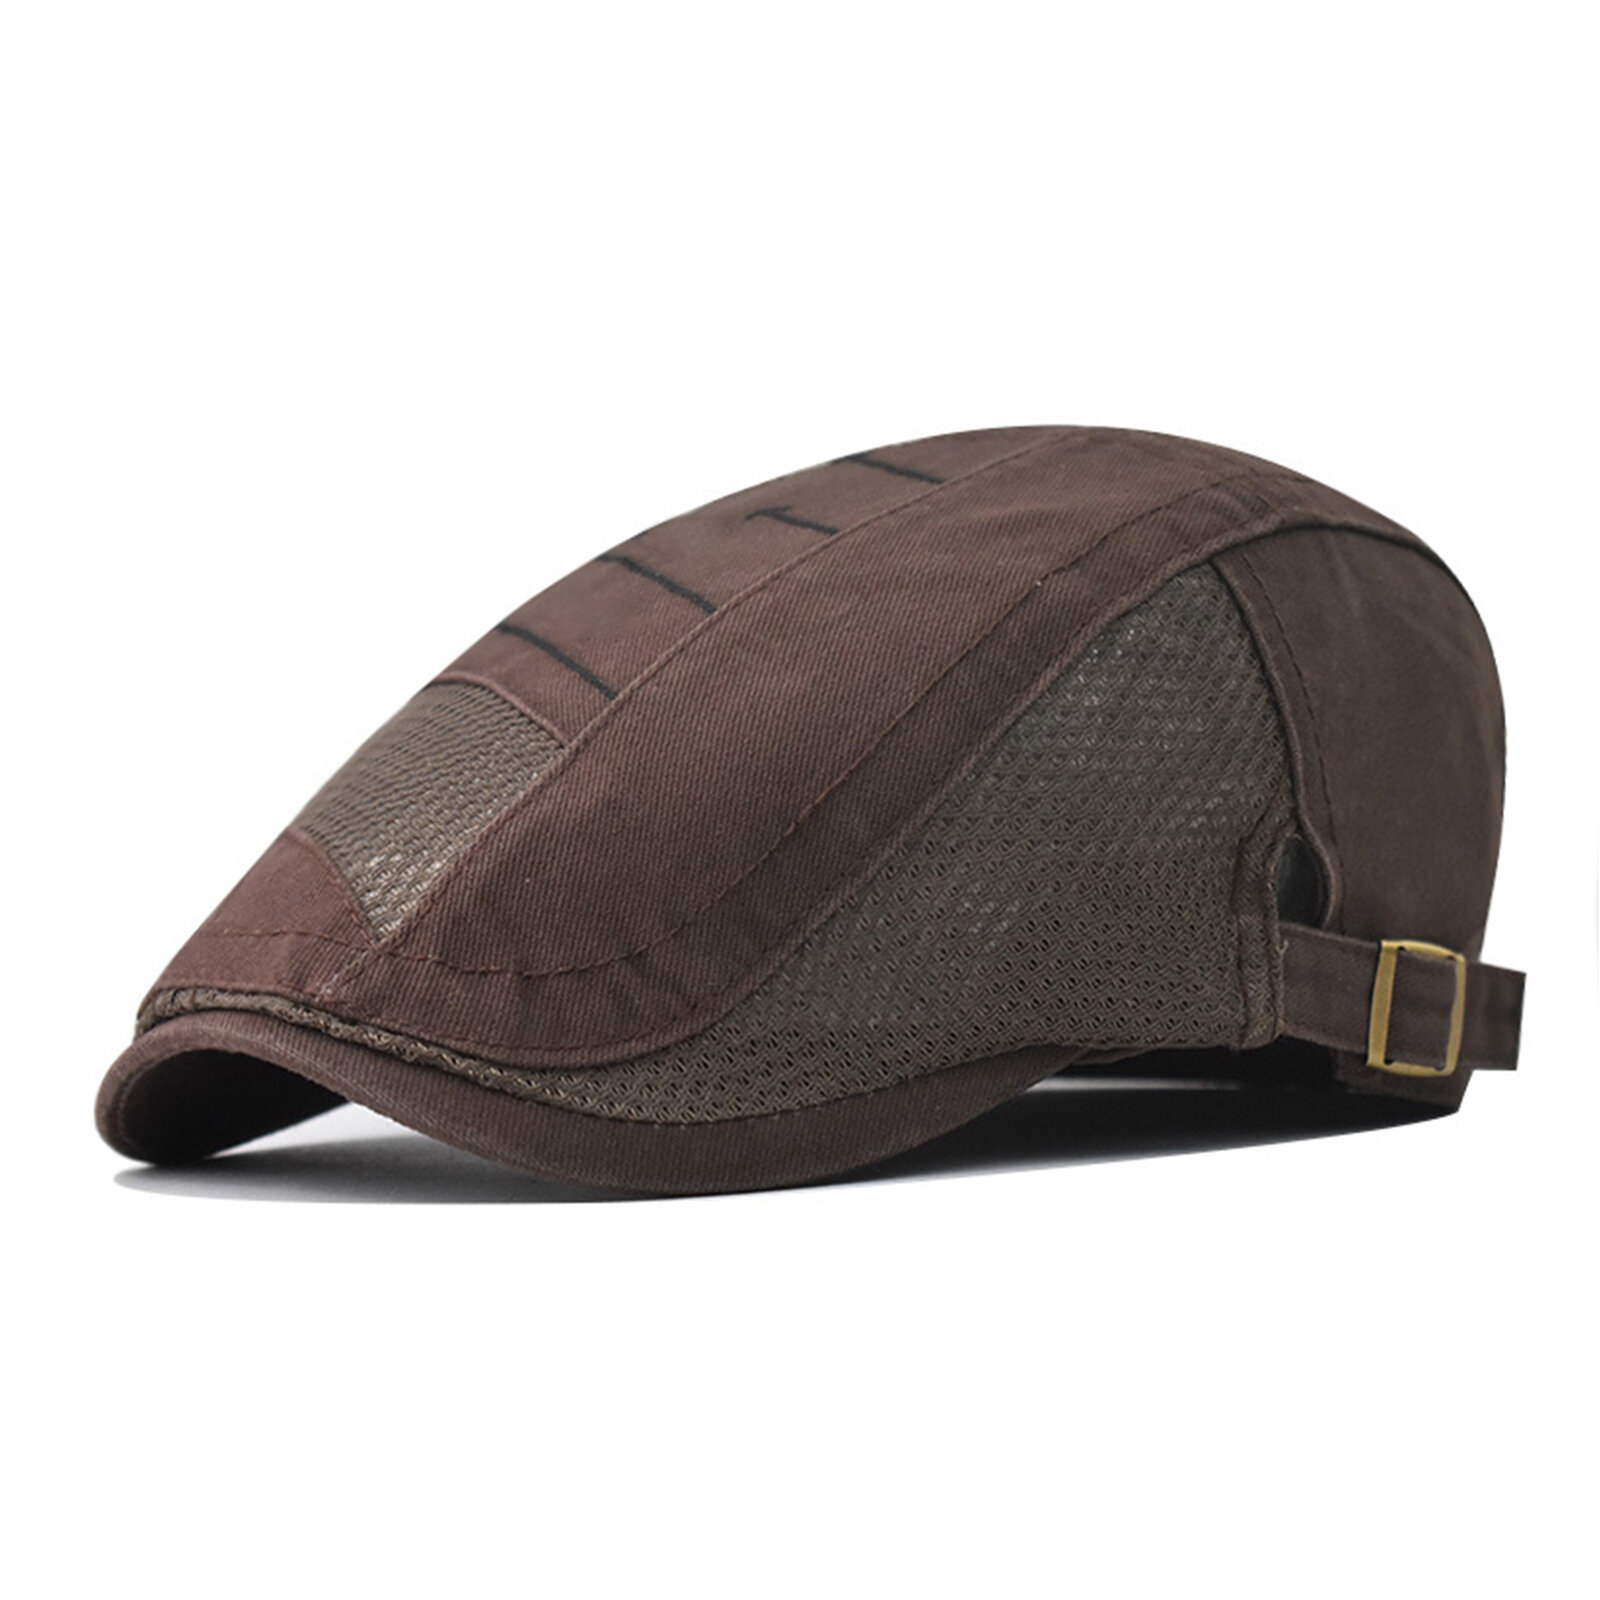 Menico Men's Cotton Mesh Breathable Shade Short Brim Casual Retro Edgy Hat Beret Flat Cap